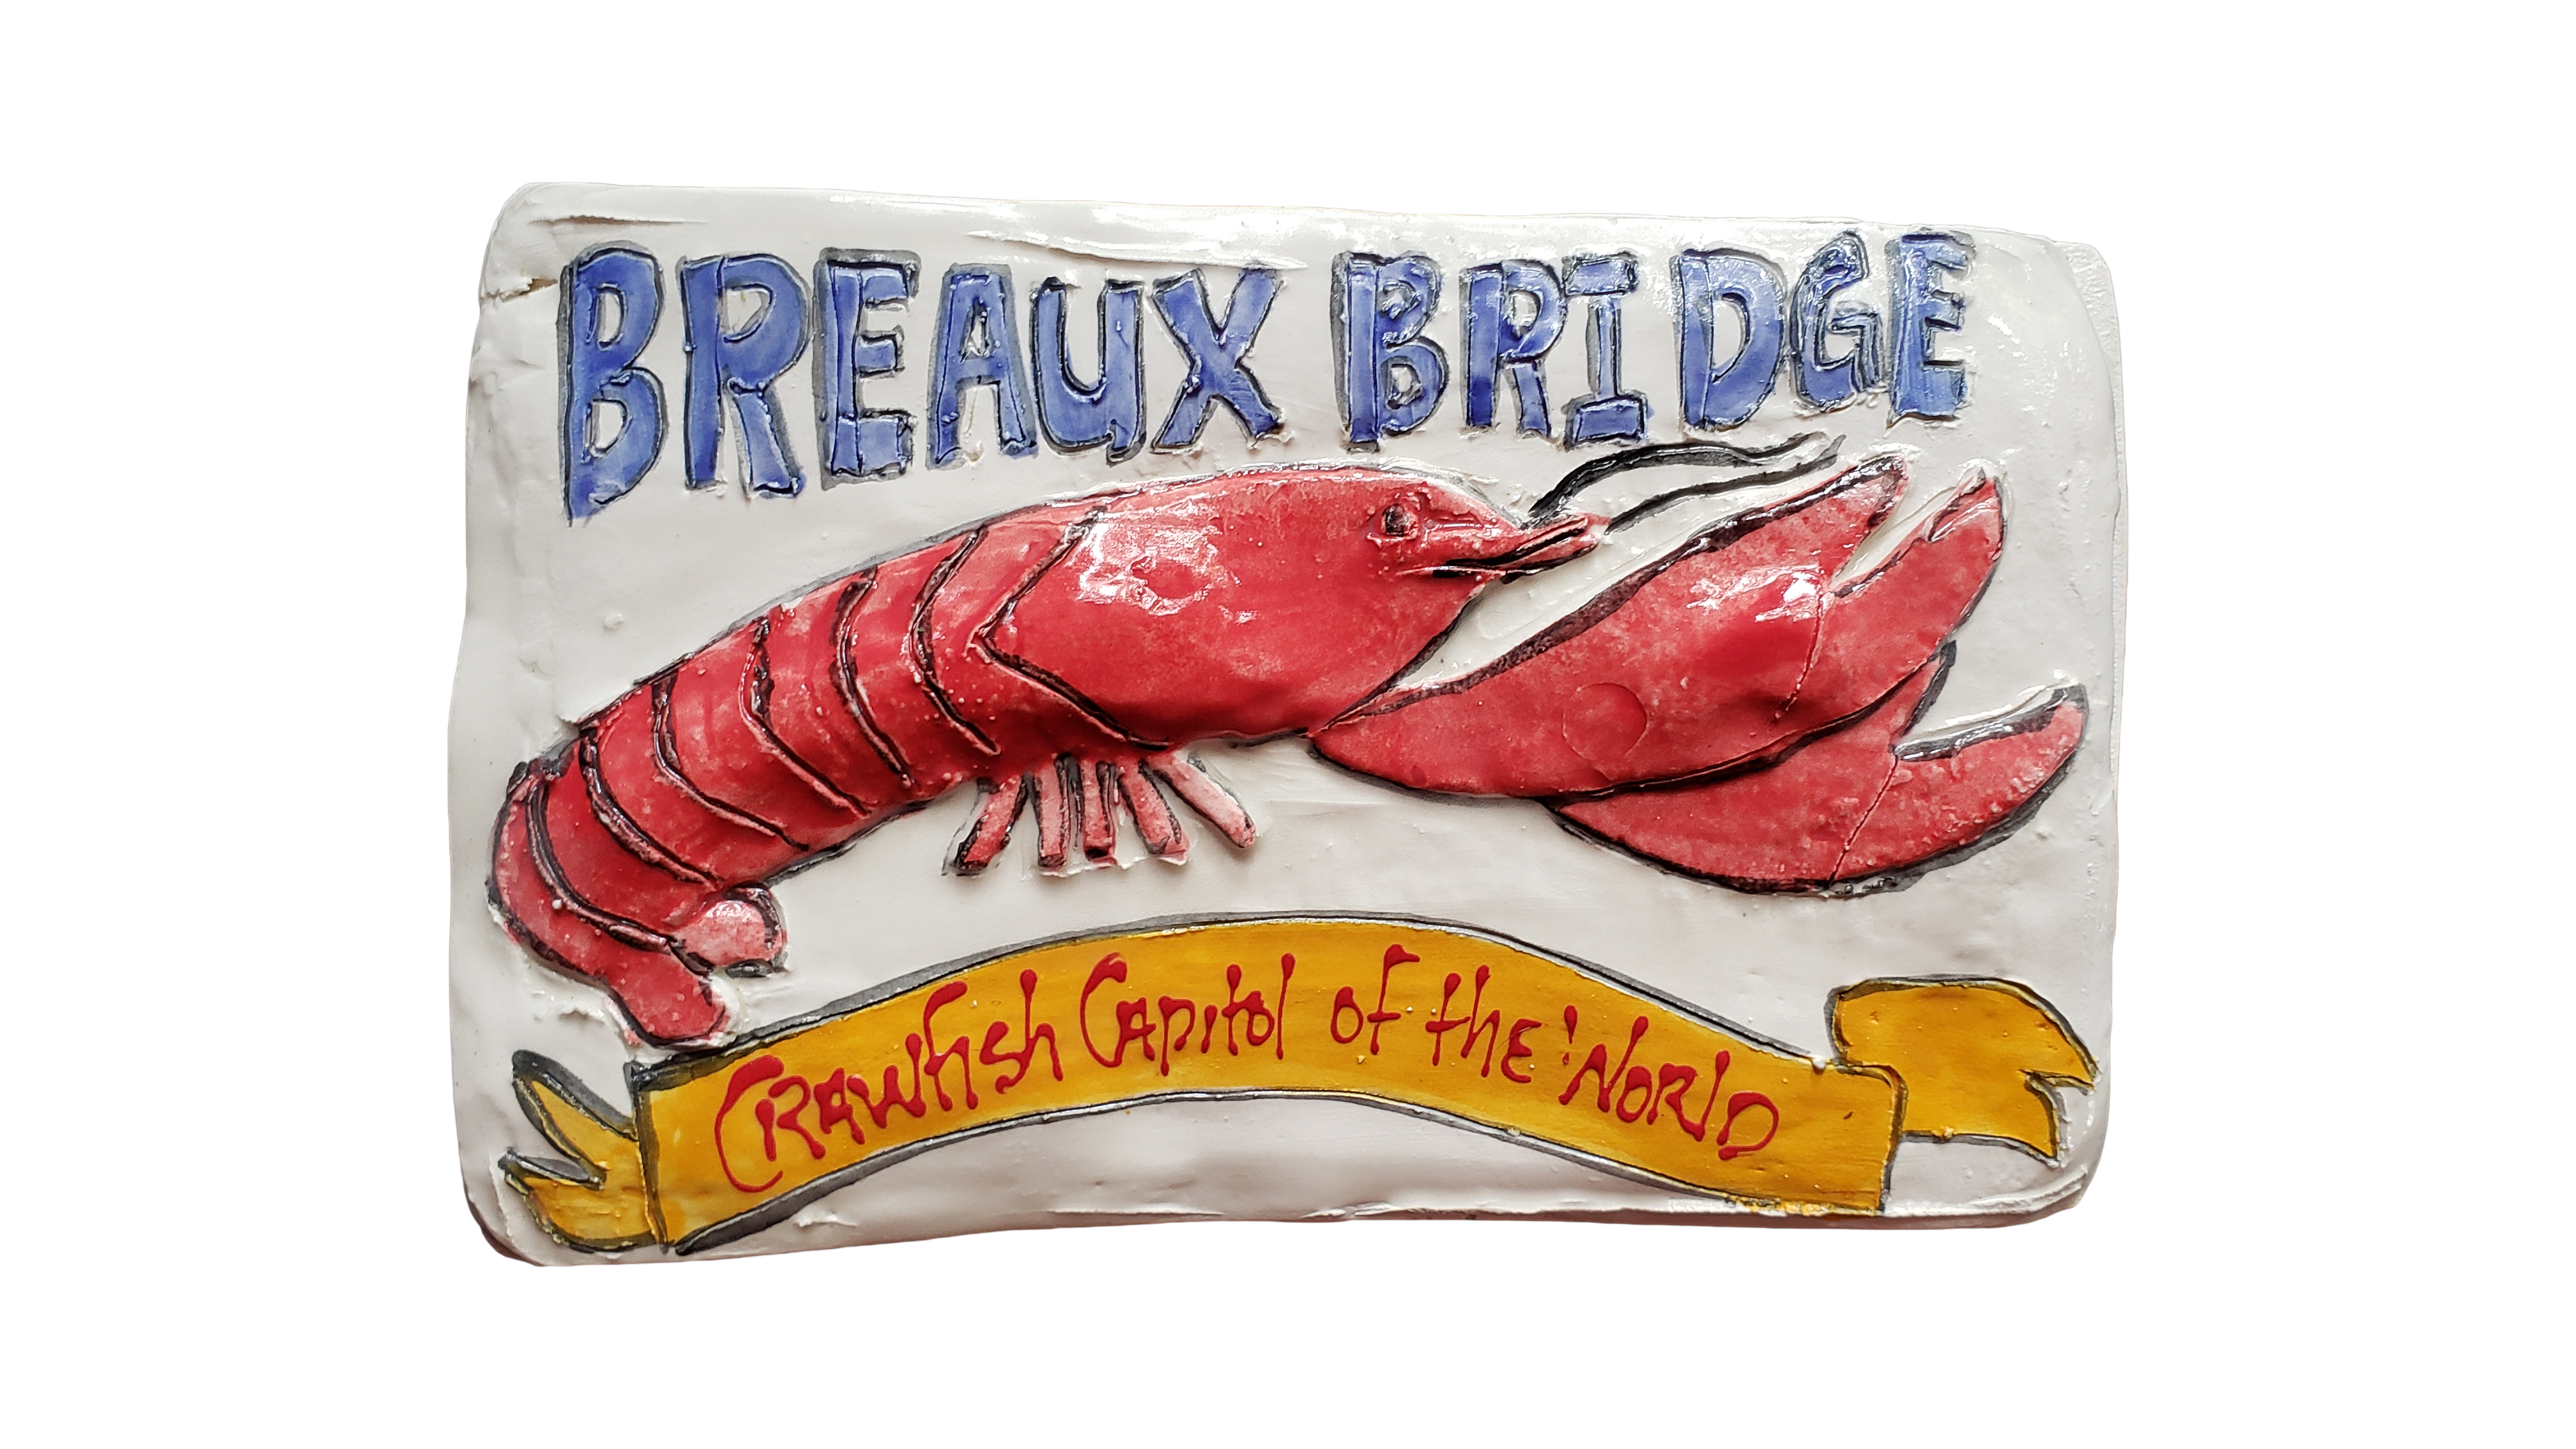 Breaux Bridge Crawfish